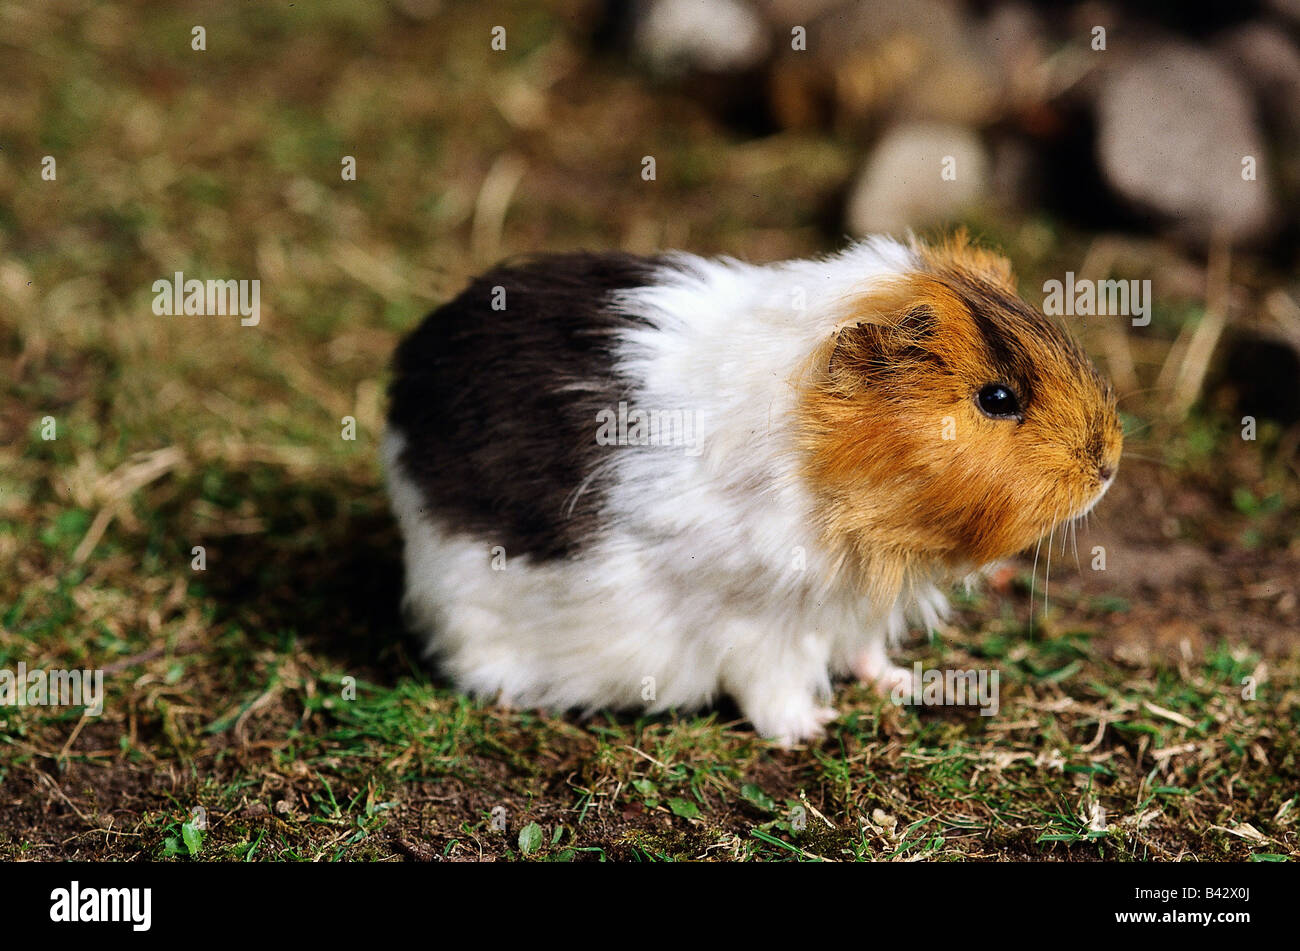 zoology / animals, mammal / mammalian, cavies, domestic guinea pig, (Cavia aperea porcellus), distribution: South America, anima Stock Photo